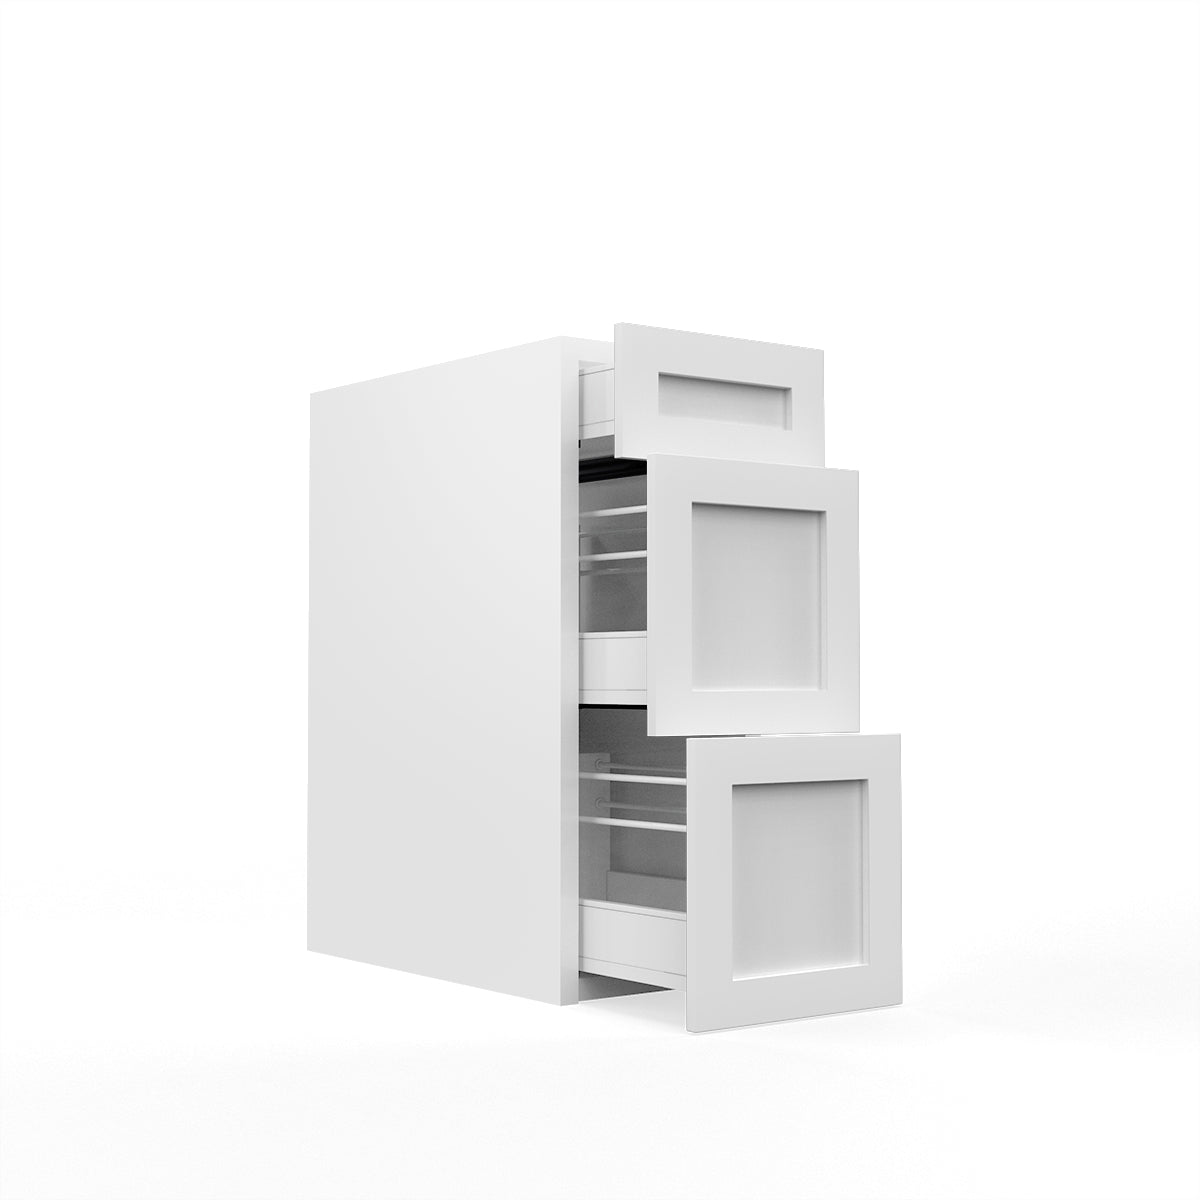 RTA - White Shaker - Three Drawer Base Cabinets | 12"W x 30"H x 23.8"D